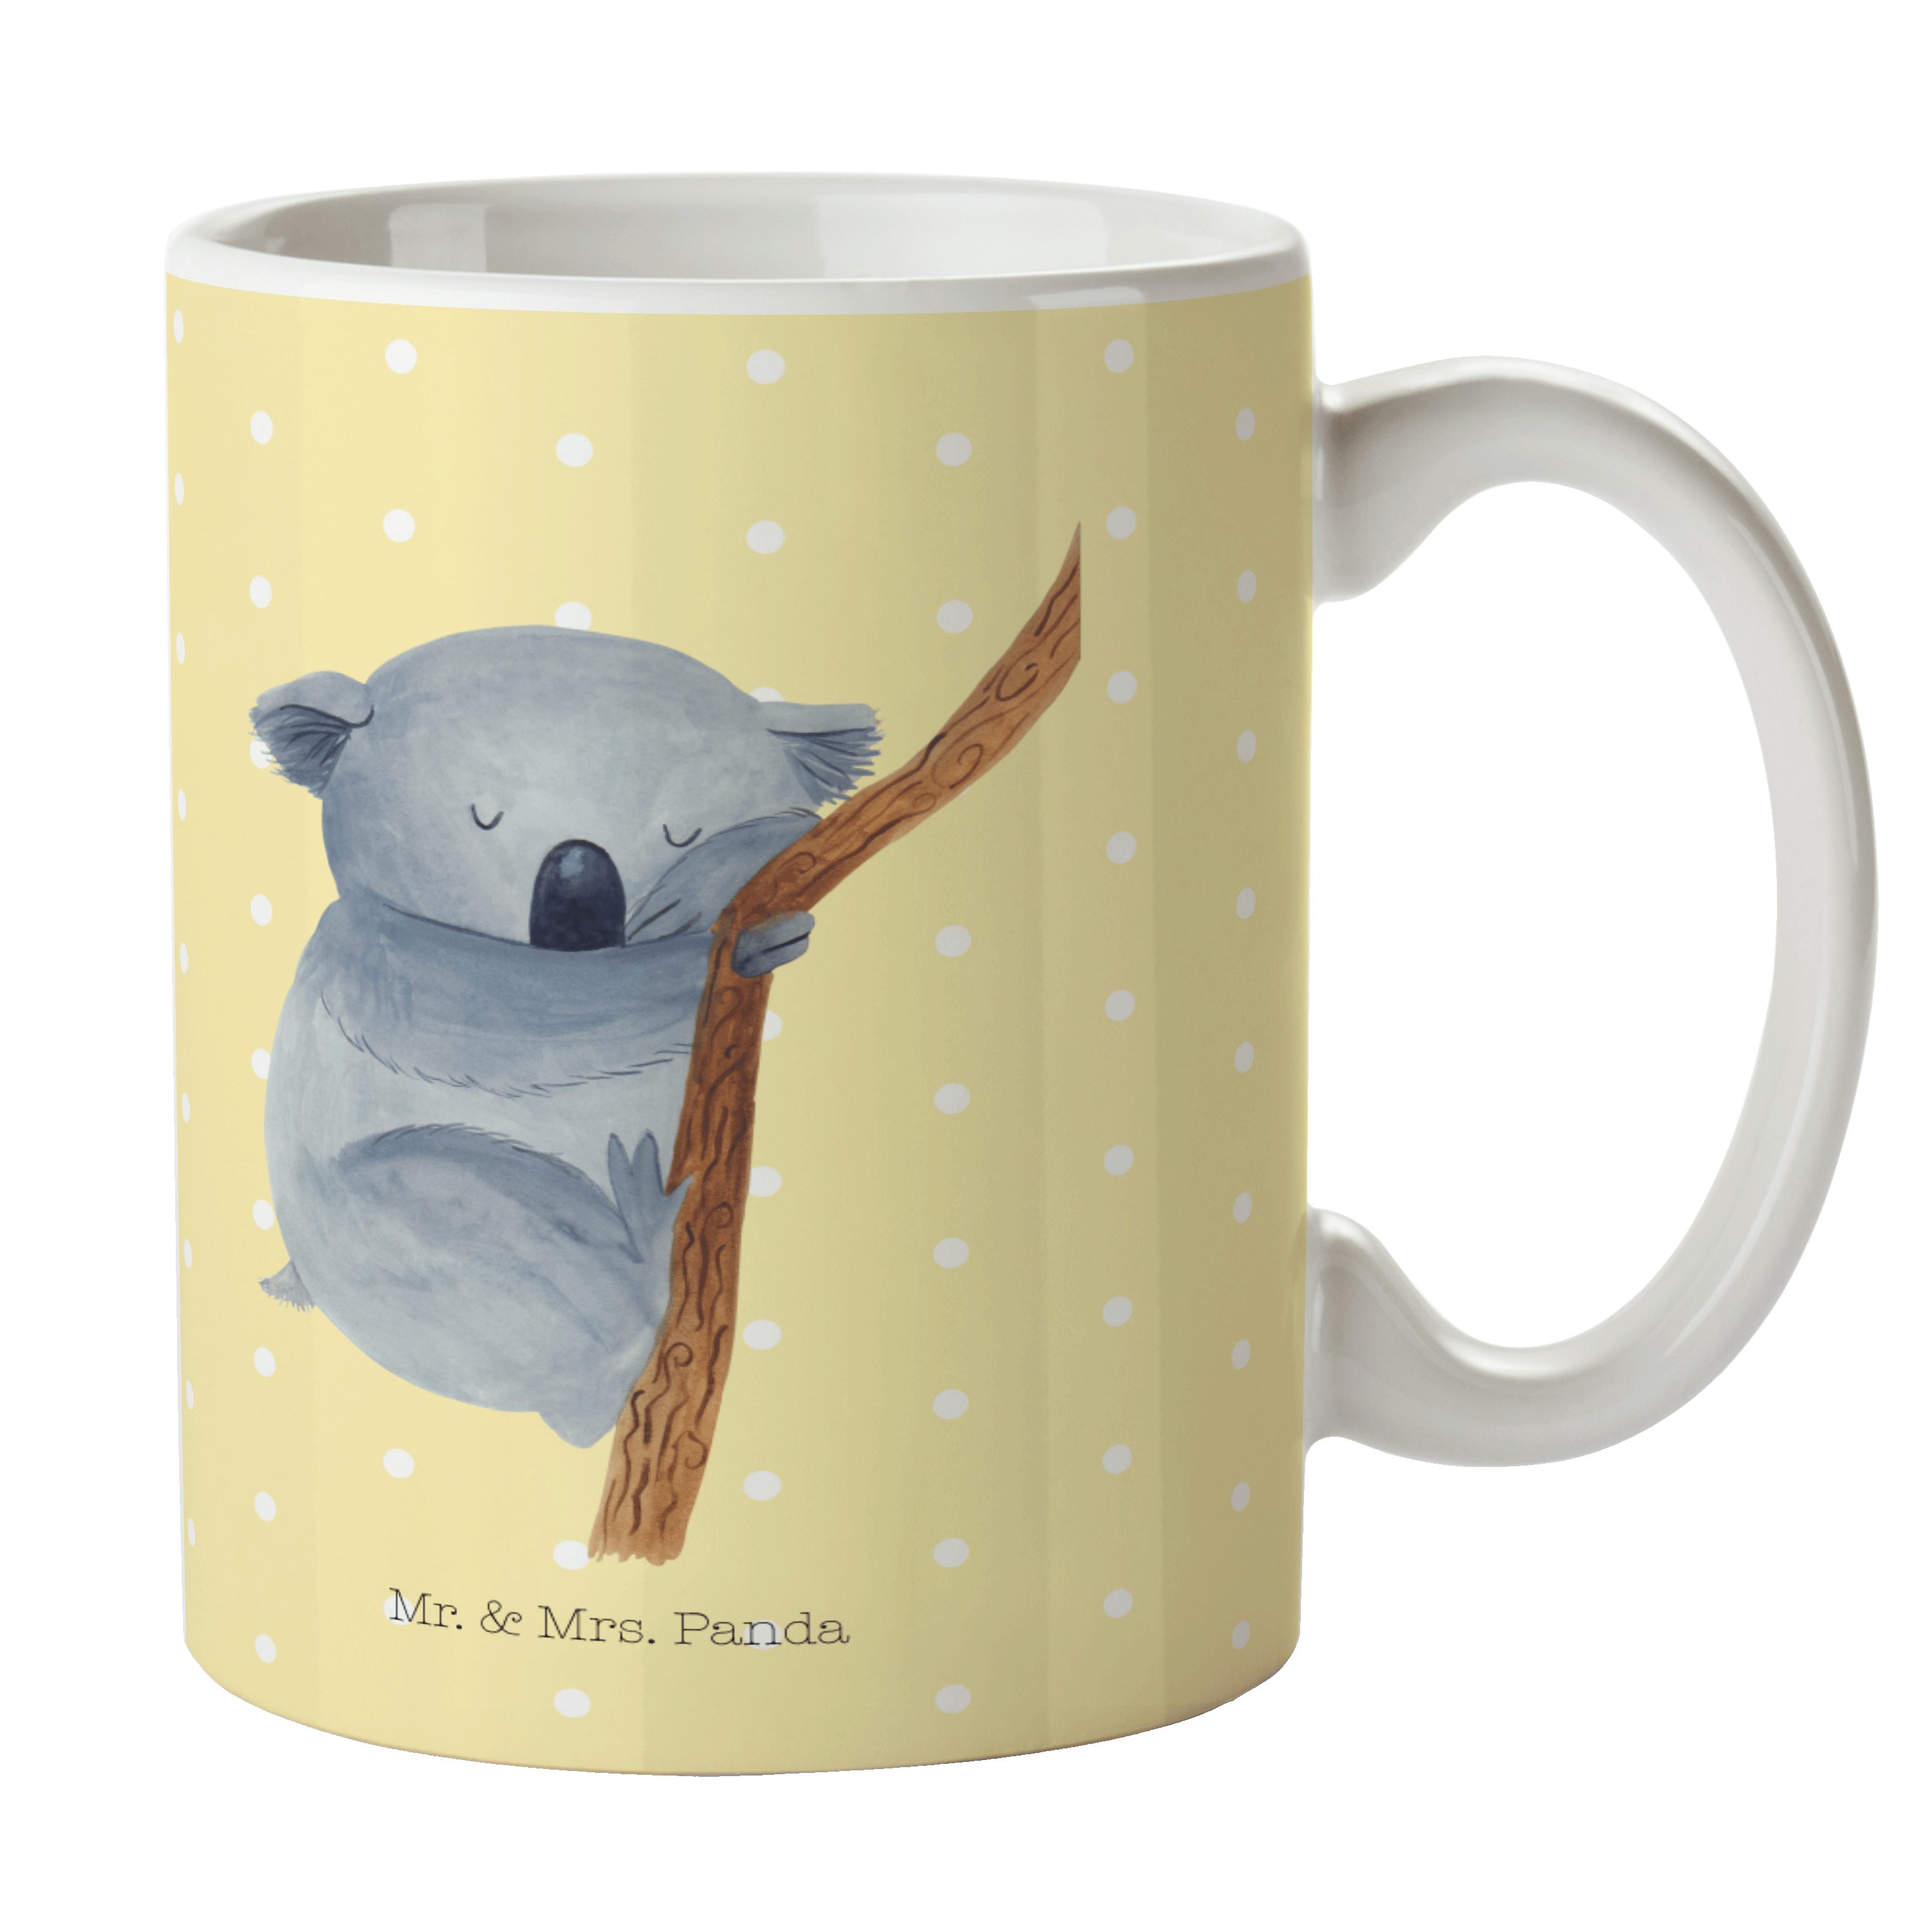 Mr. & Mrs. Panda Tasse Koalabär - Gelb Pastell - Geschenk, Kaffeetasse, Gute Laune, Tasse, T, Keramik